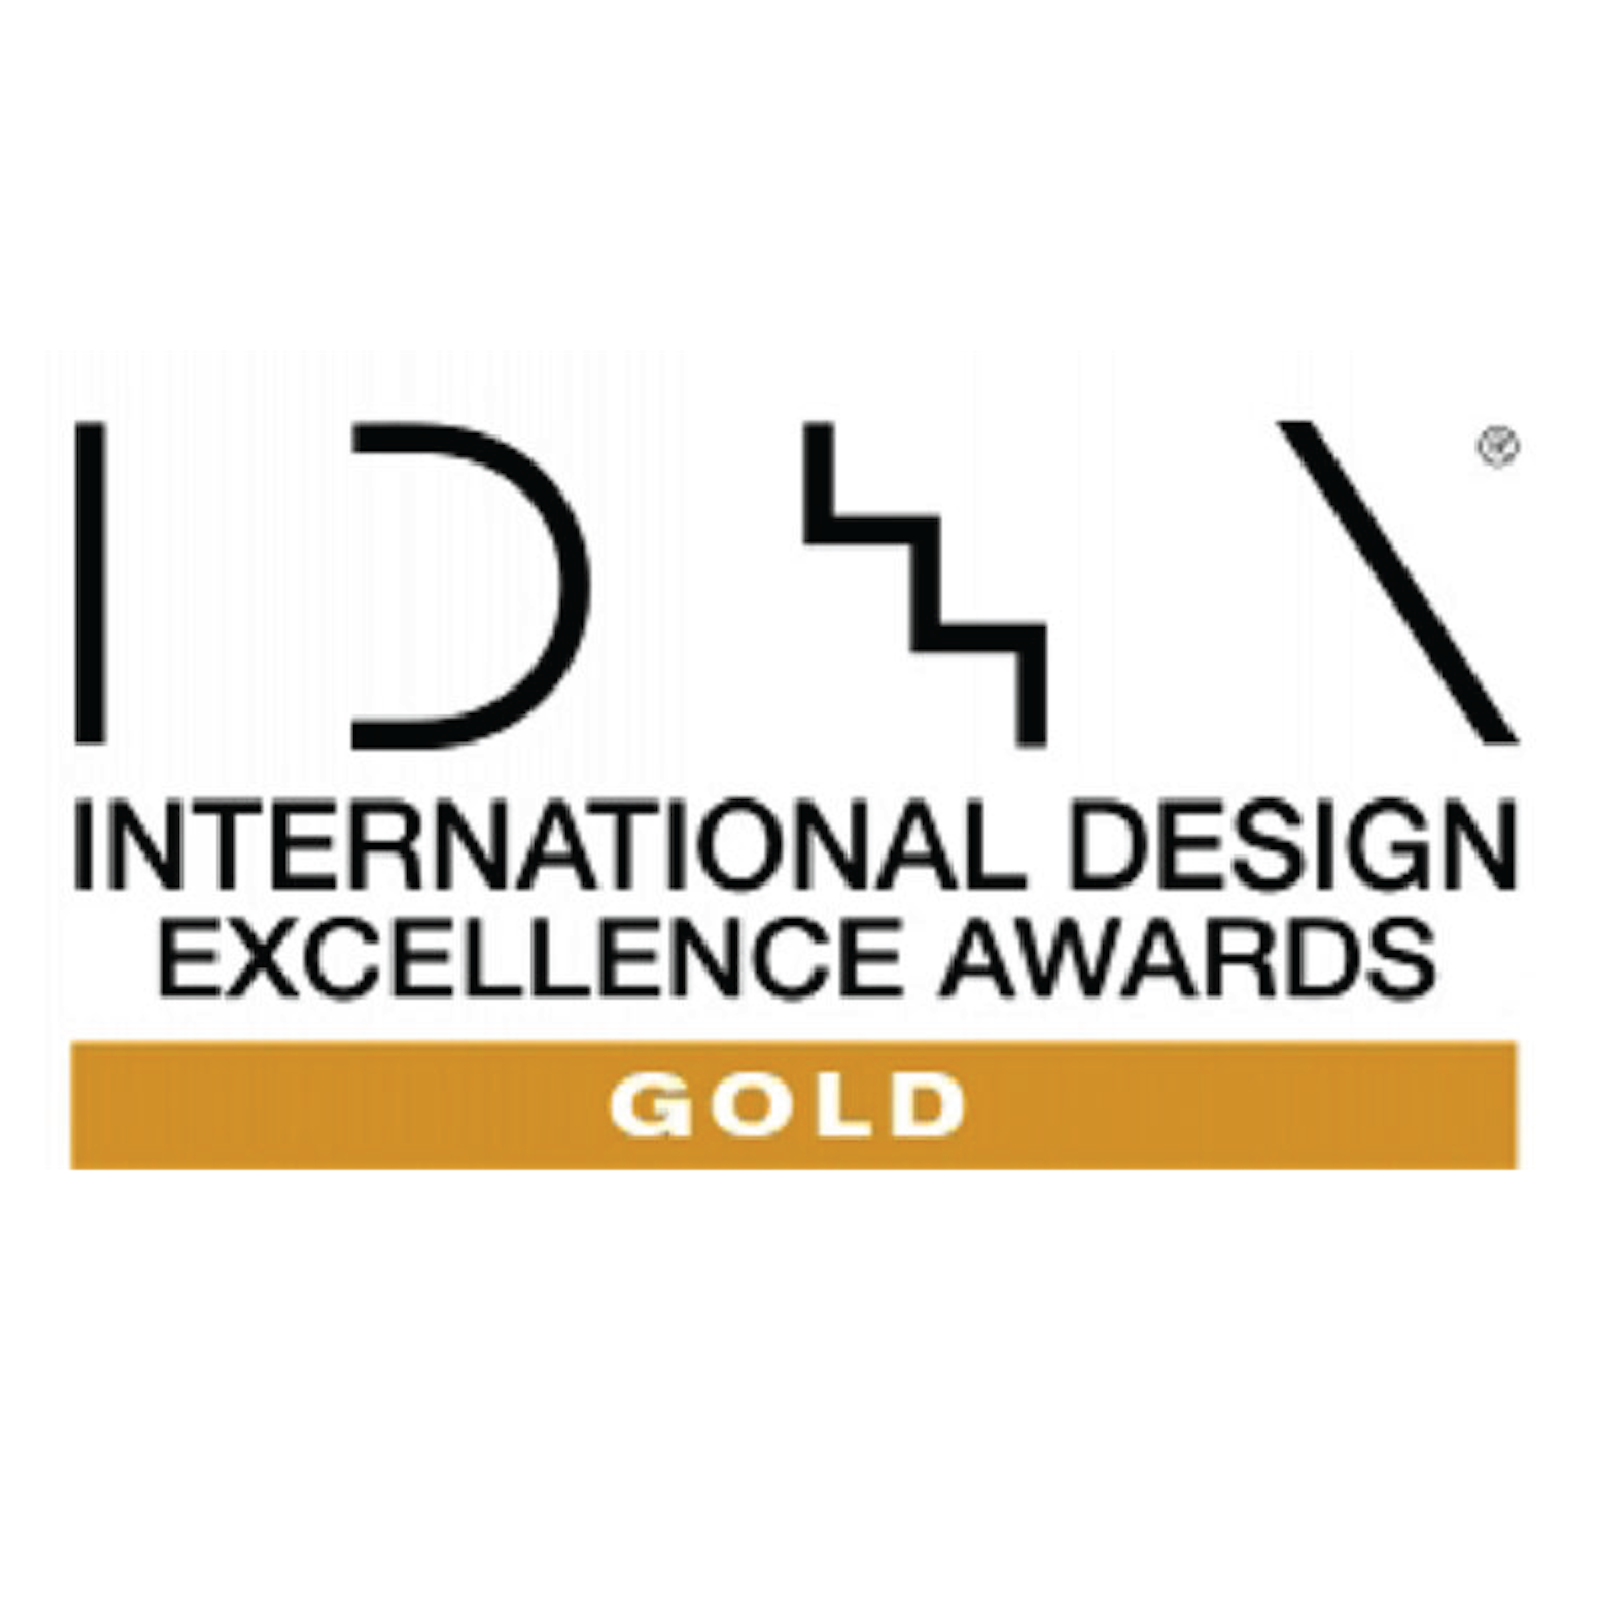 The International Design Excellence Awards Gold award for Schroeder packaging design.